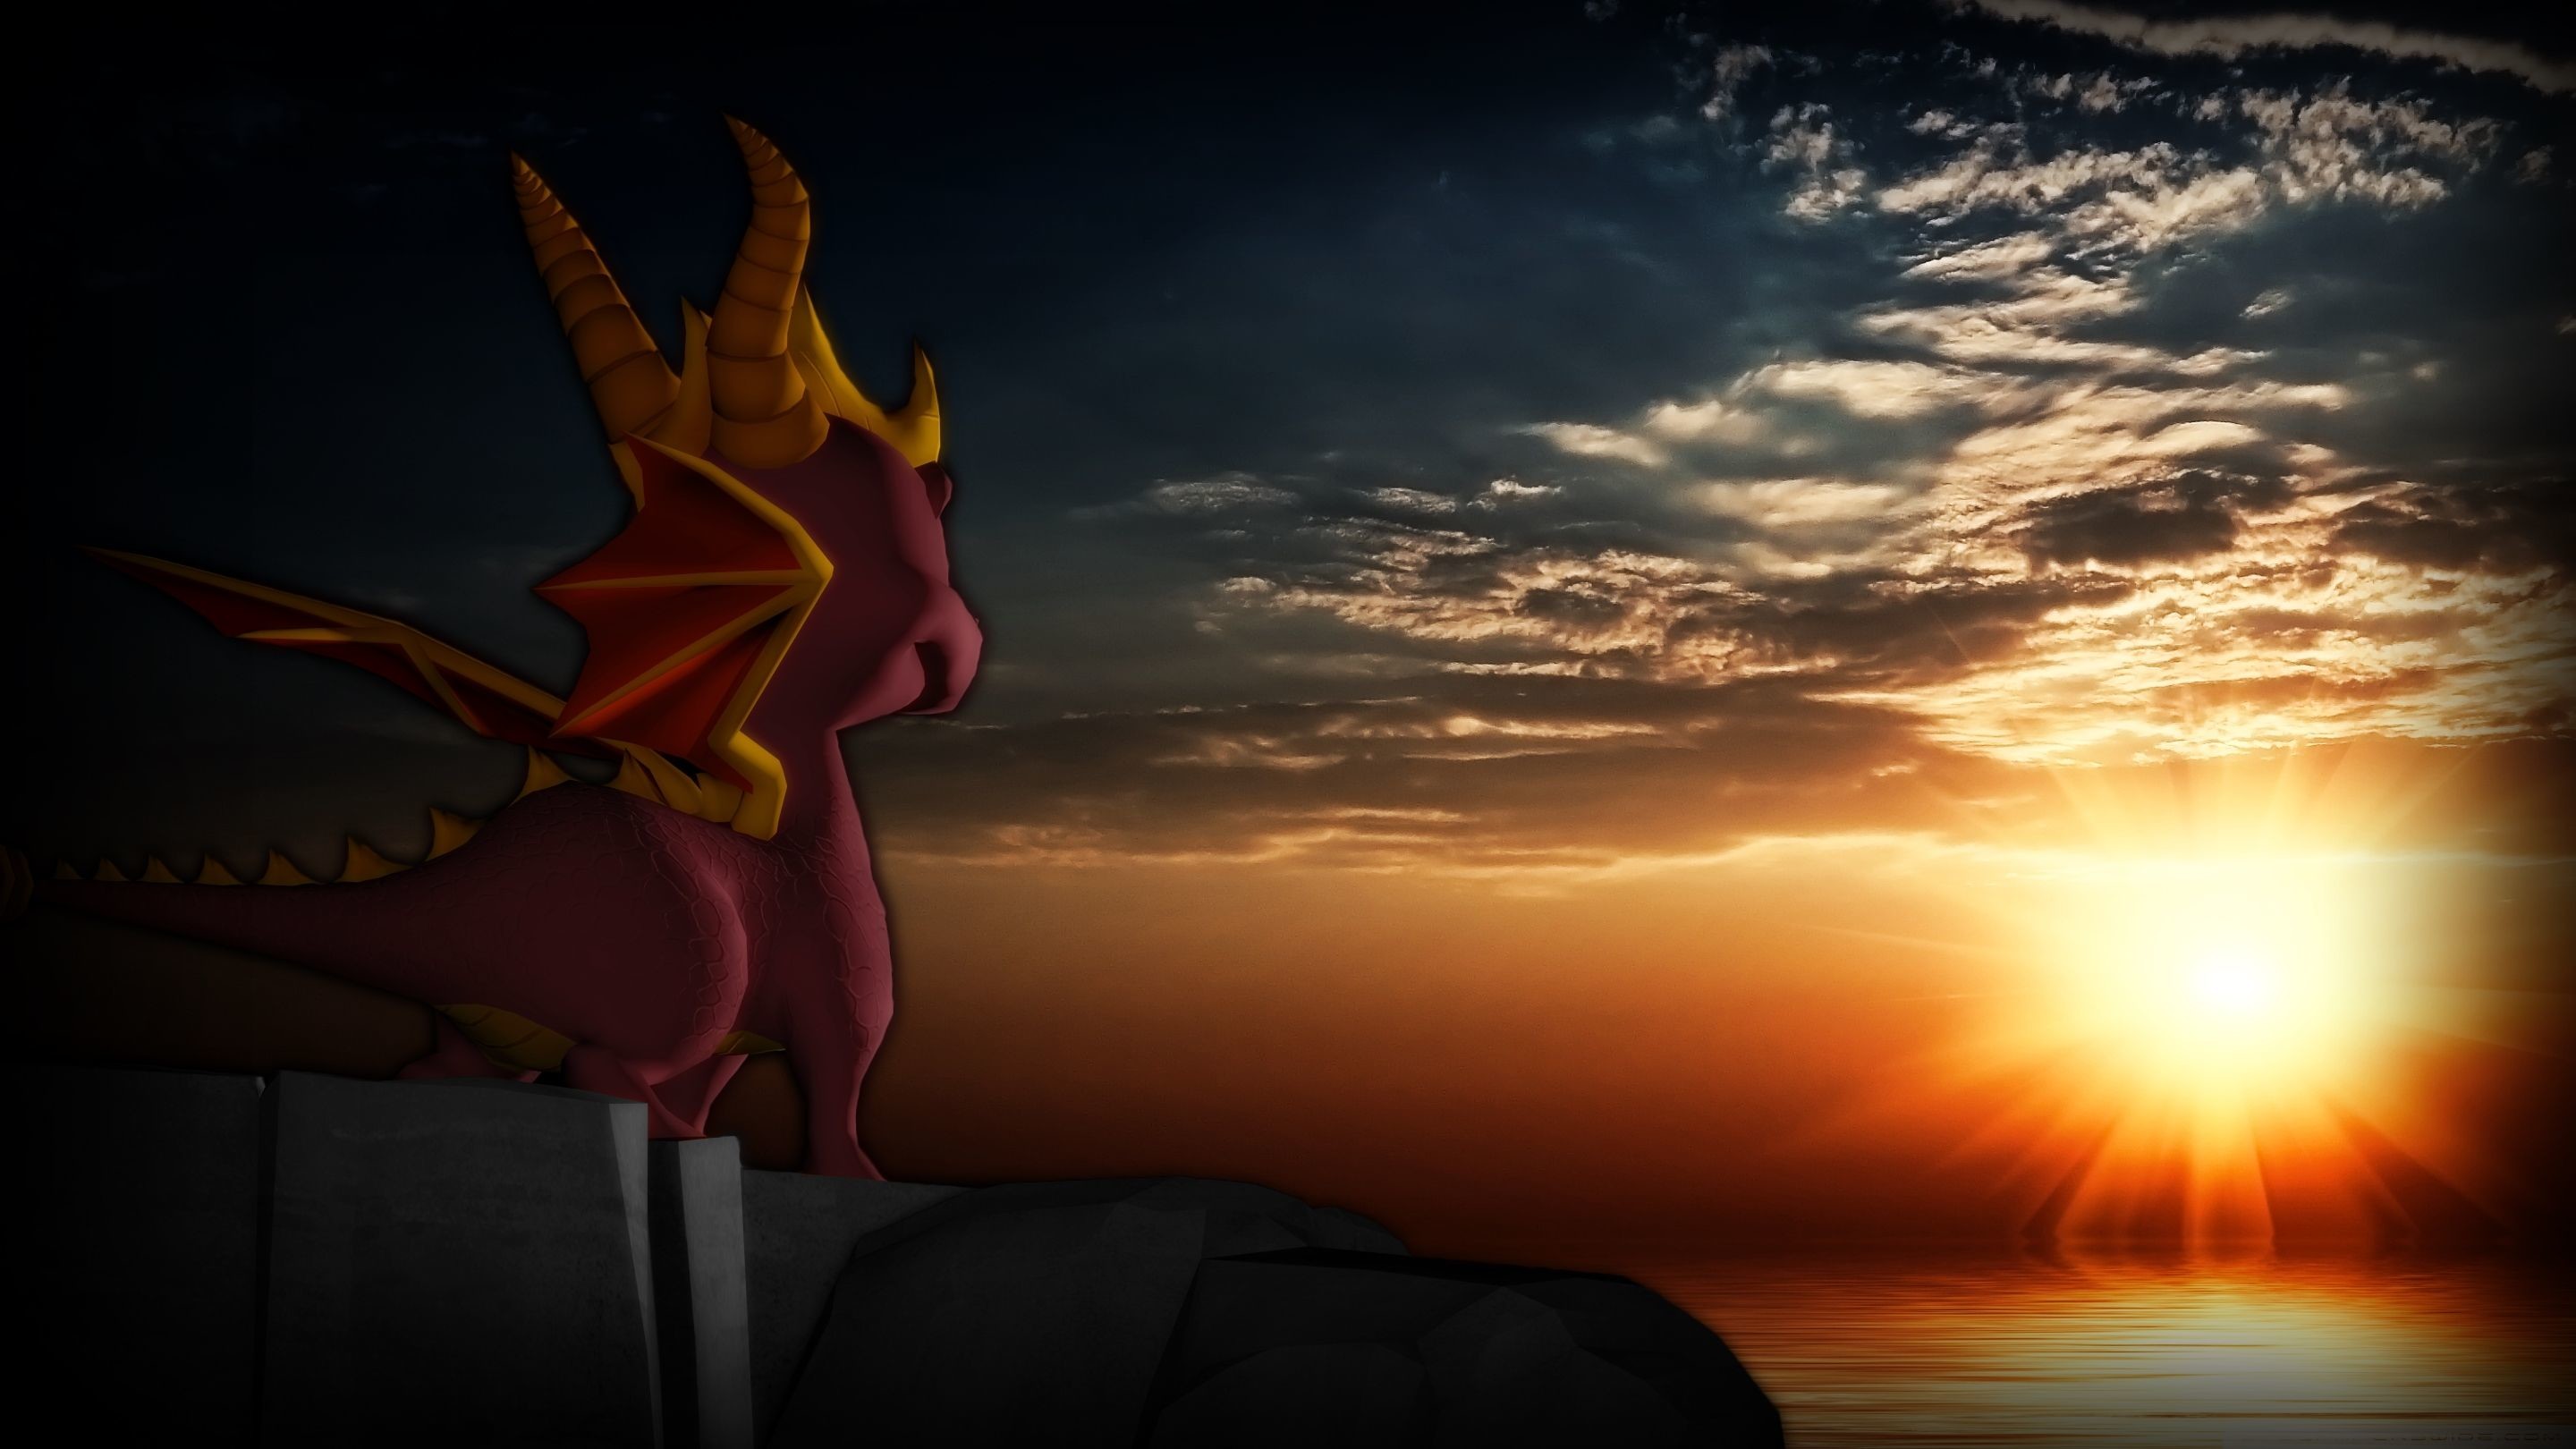 2880x1620 Spyro The Dragon Sunset Wallpaper by Cowboygineer on DeviantArt